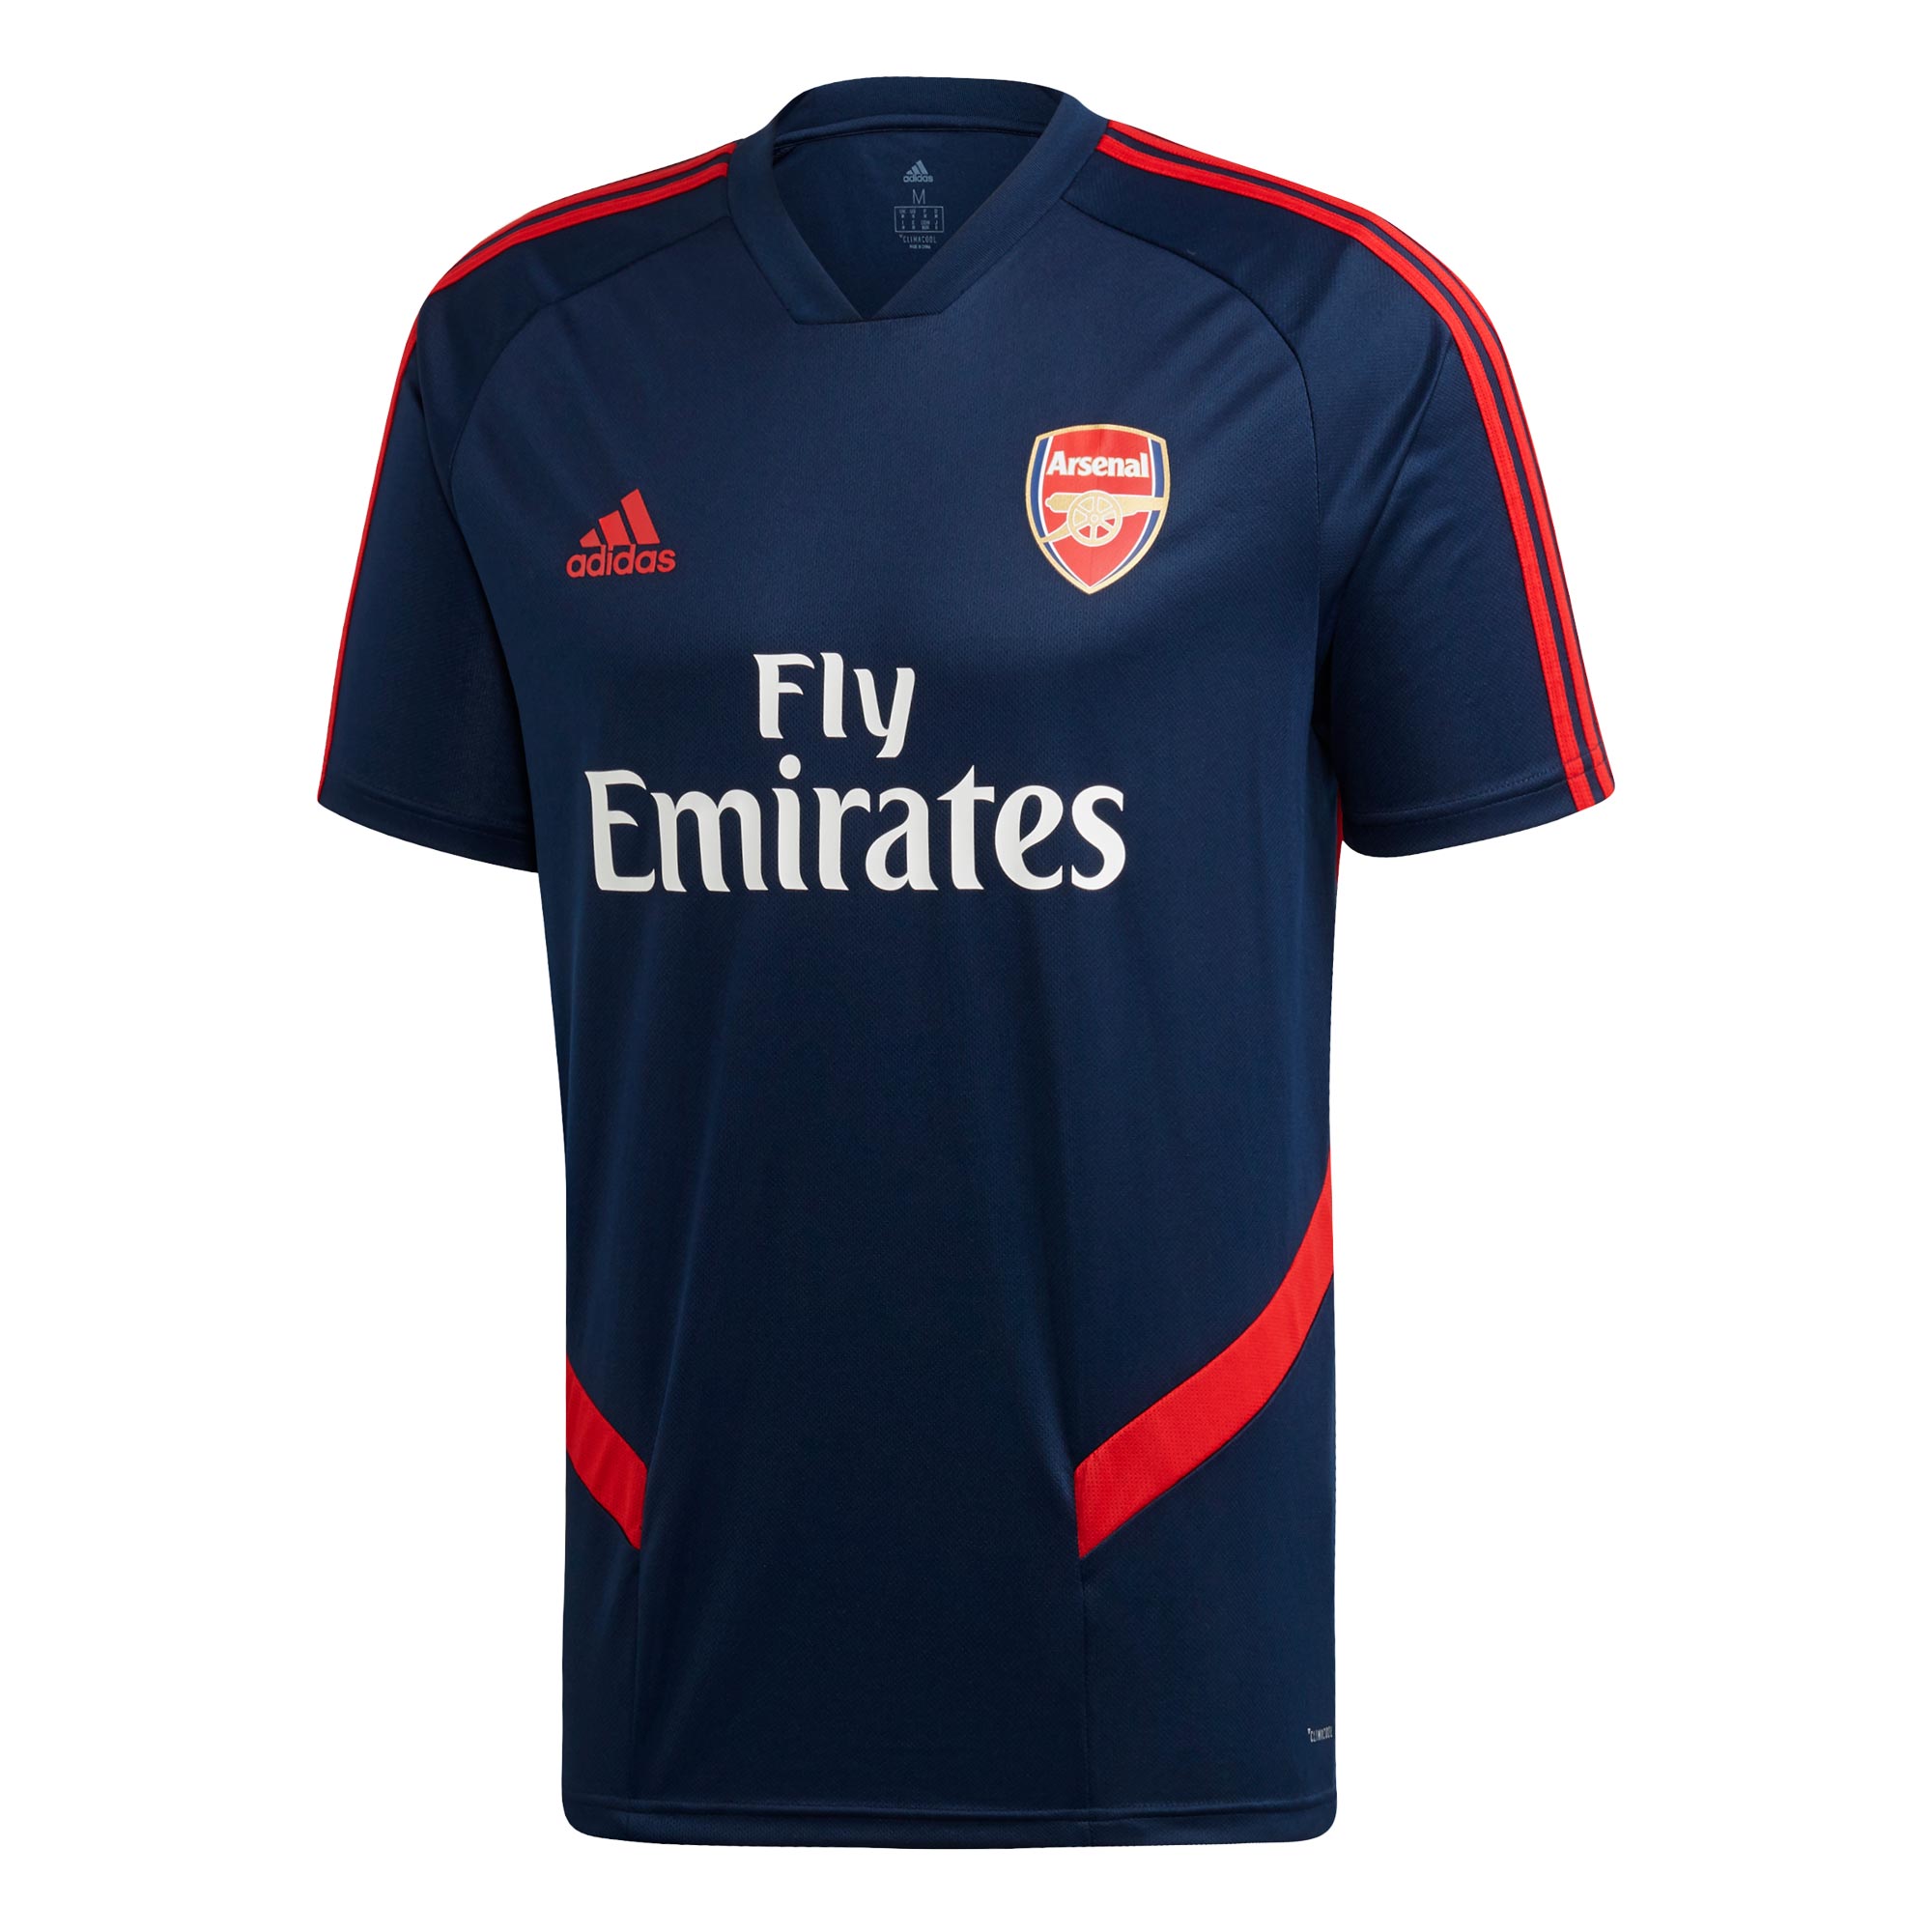 adidas Official Mens Arsenal FC Football Training Shirt Jersey Top Navy